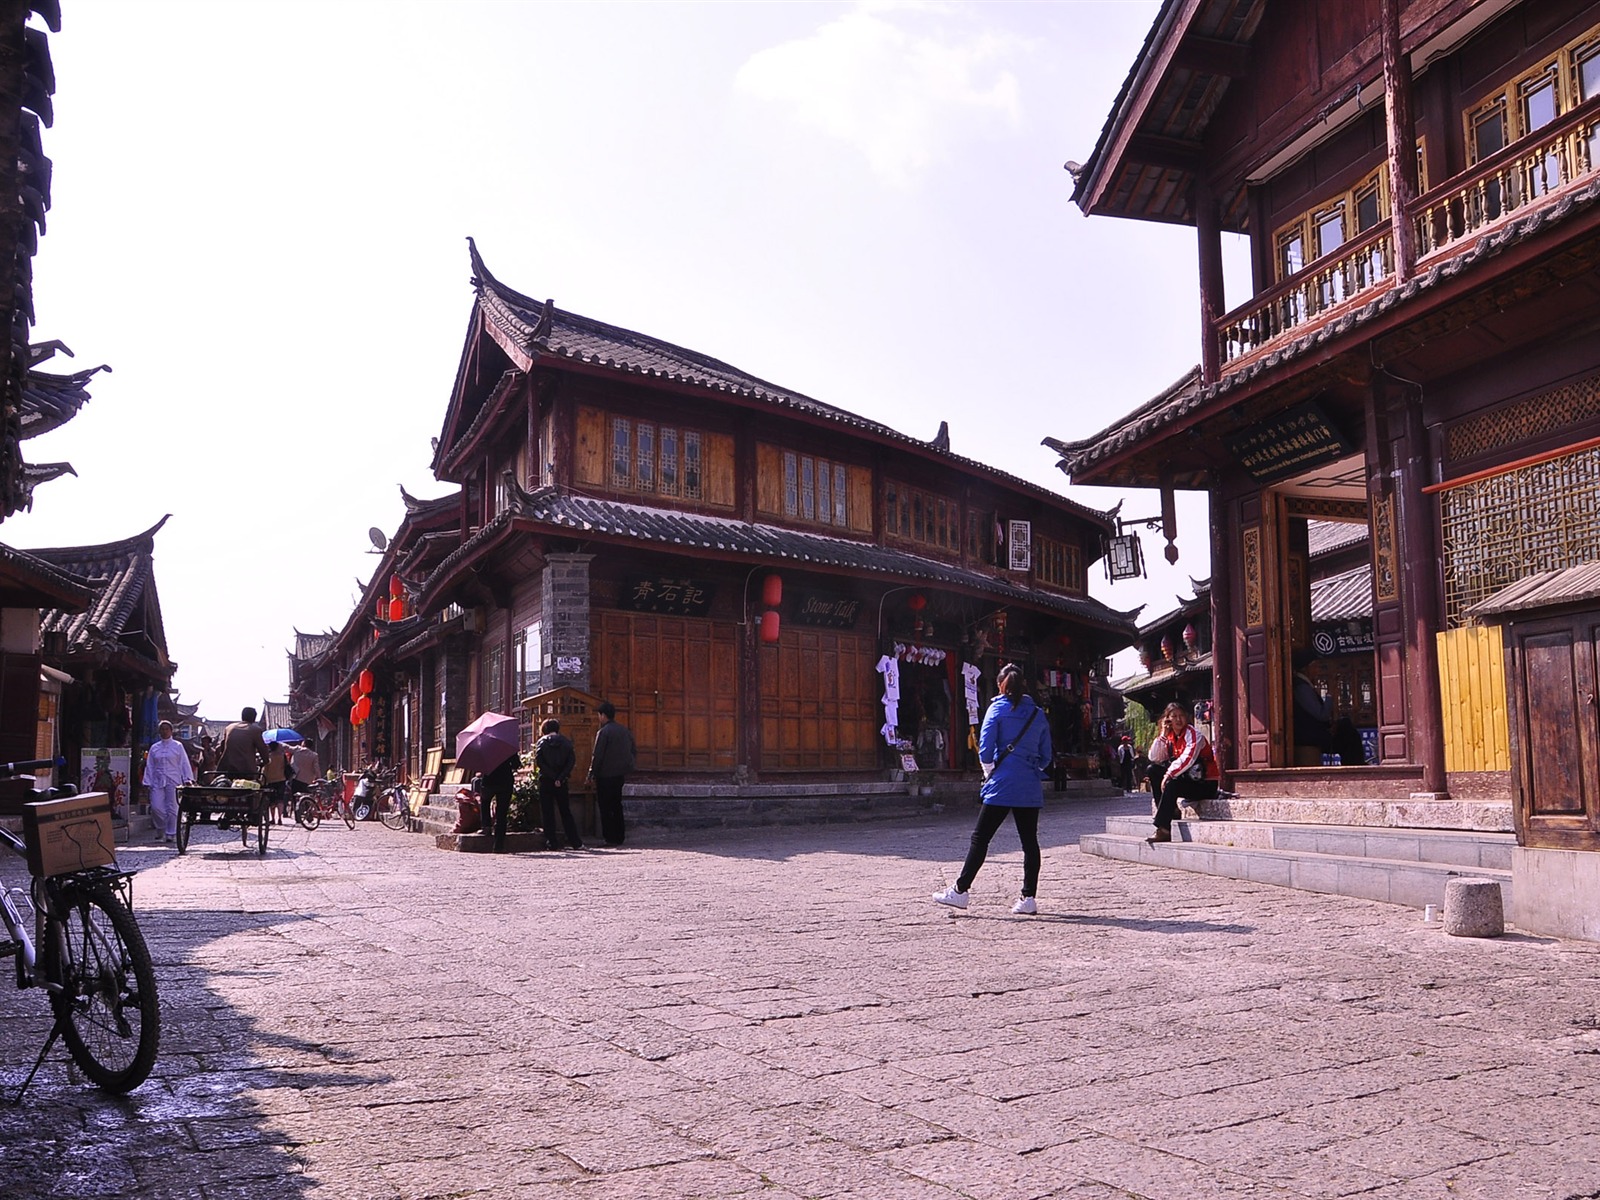 Lijiang ancient town atmosphere (2) (old Hong OK works) #14 - 1600x1200